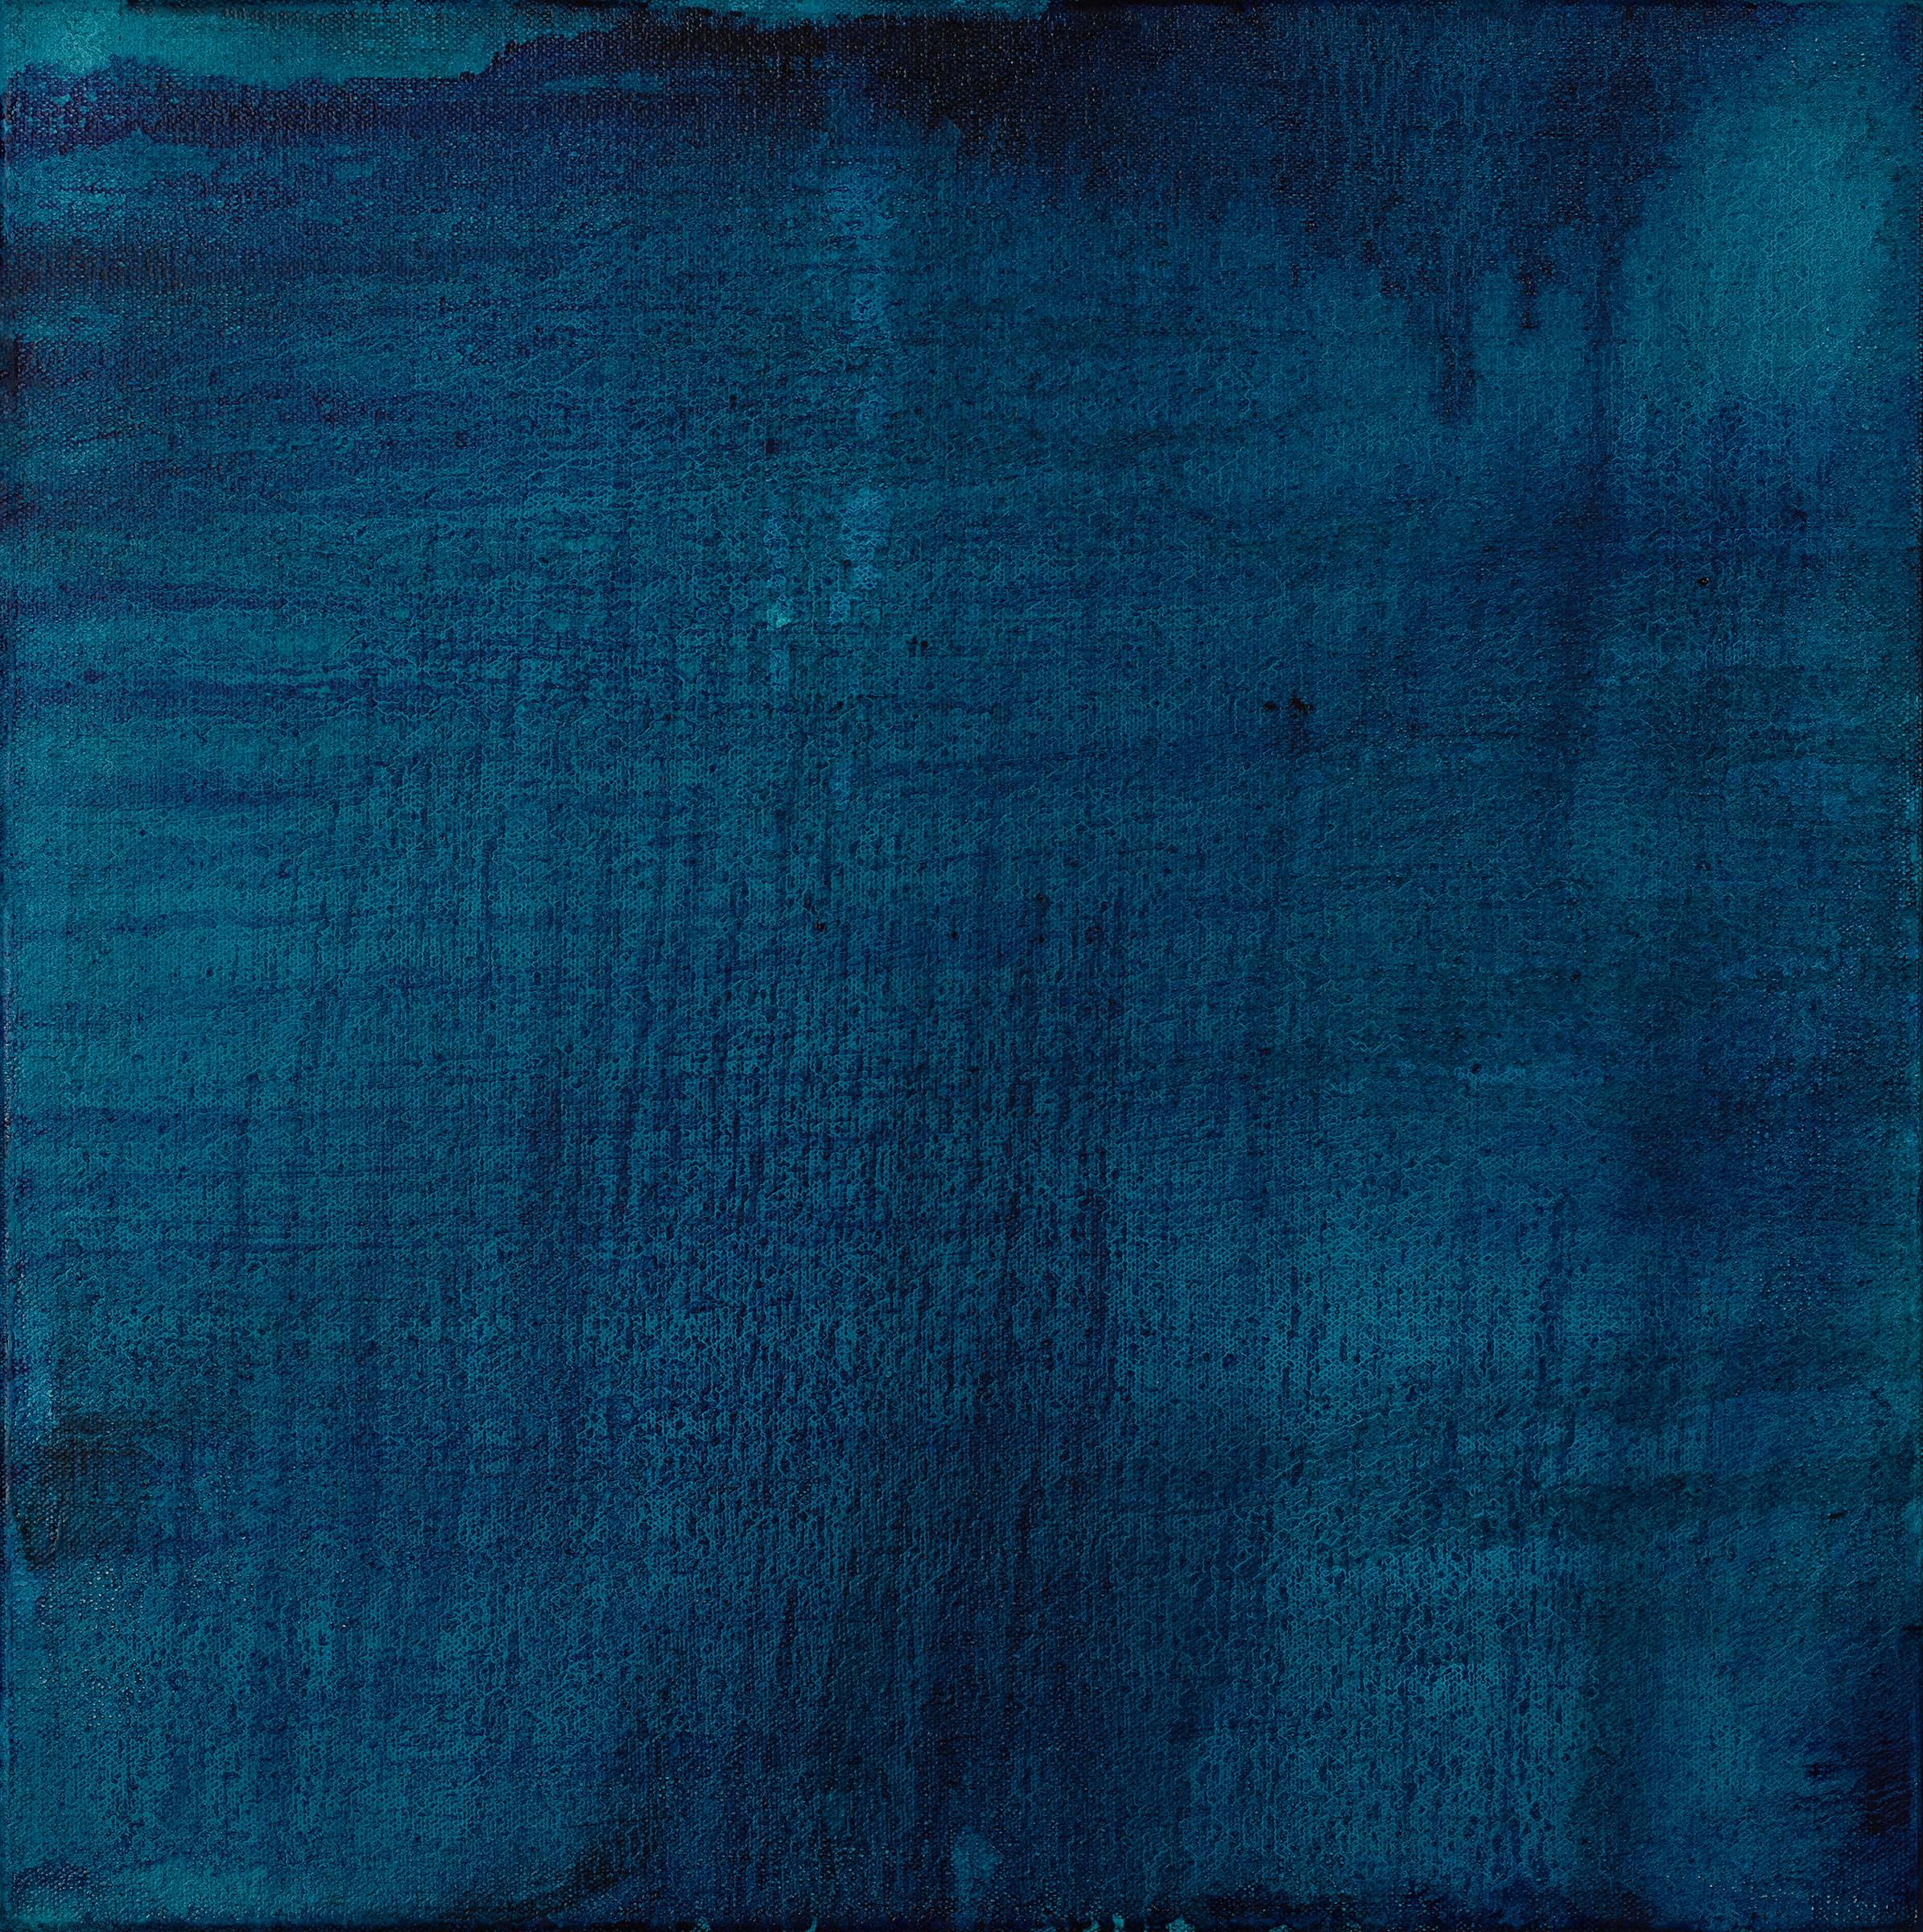 Anastasia Pelias Abstract Painting - Three II (translucent turquoise, prussian paris blue)